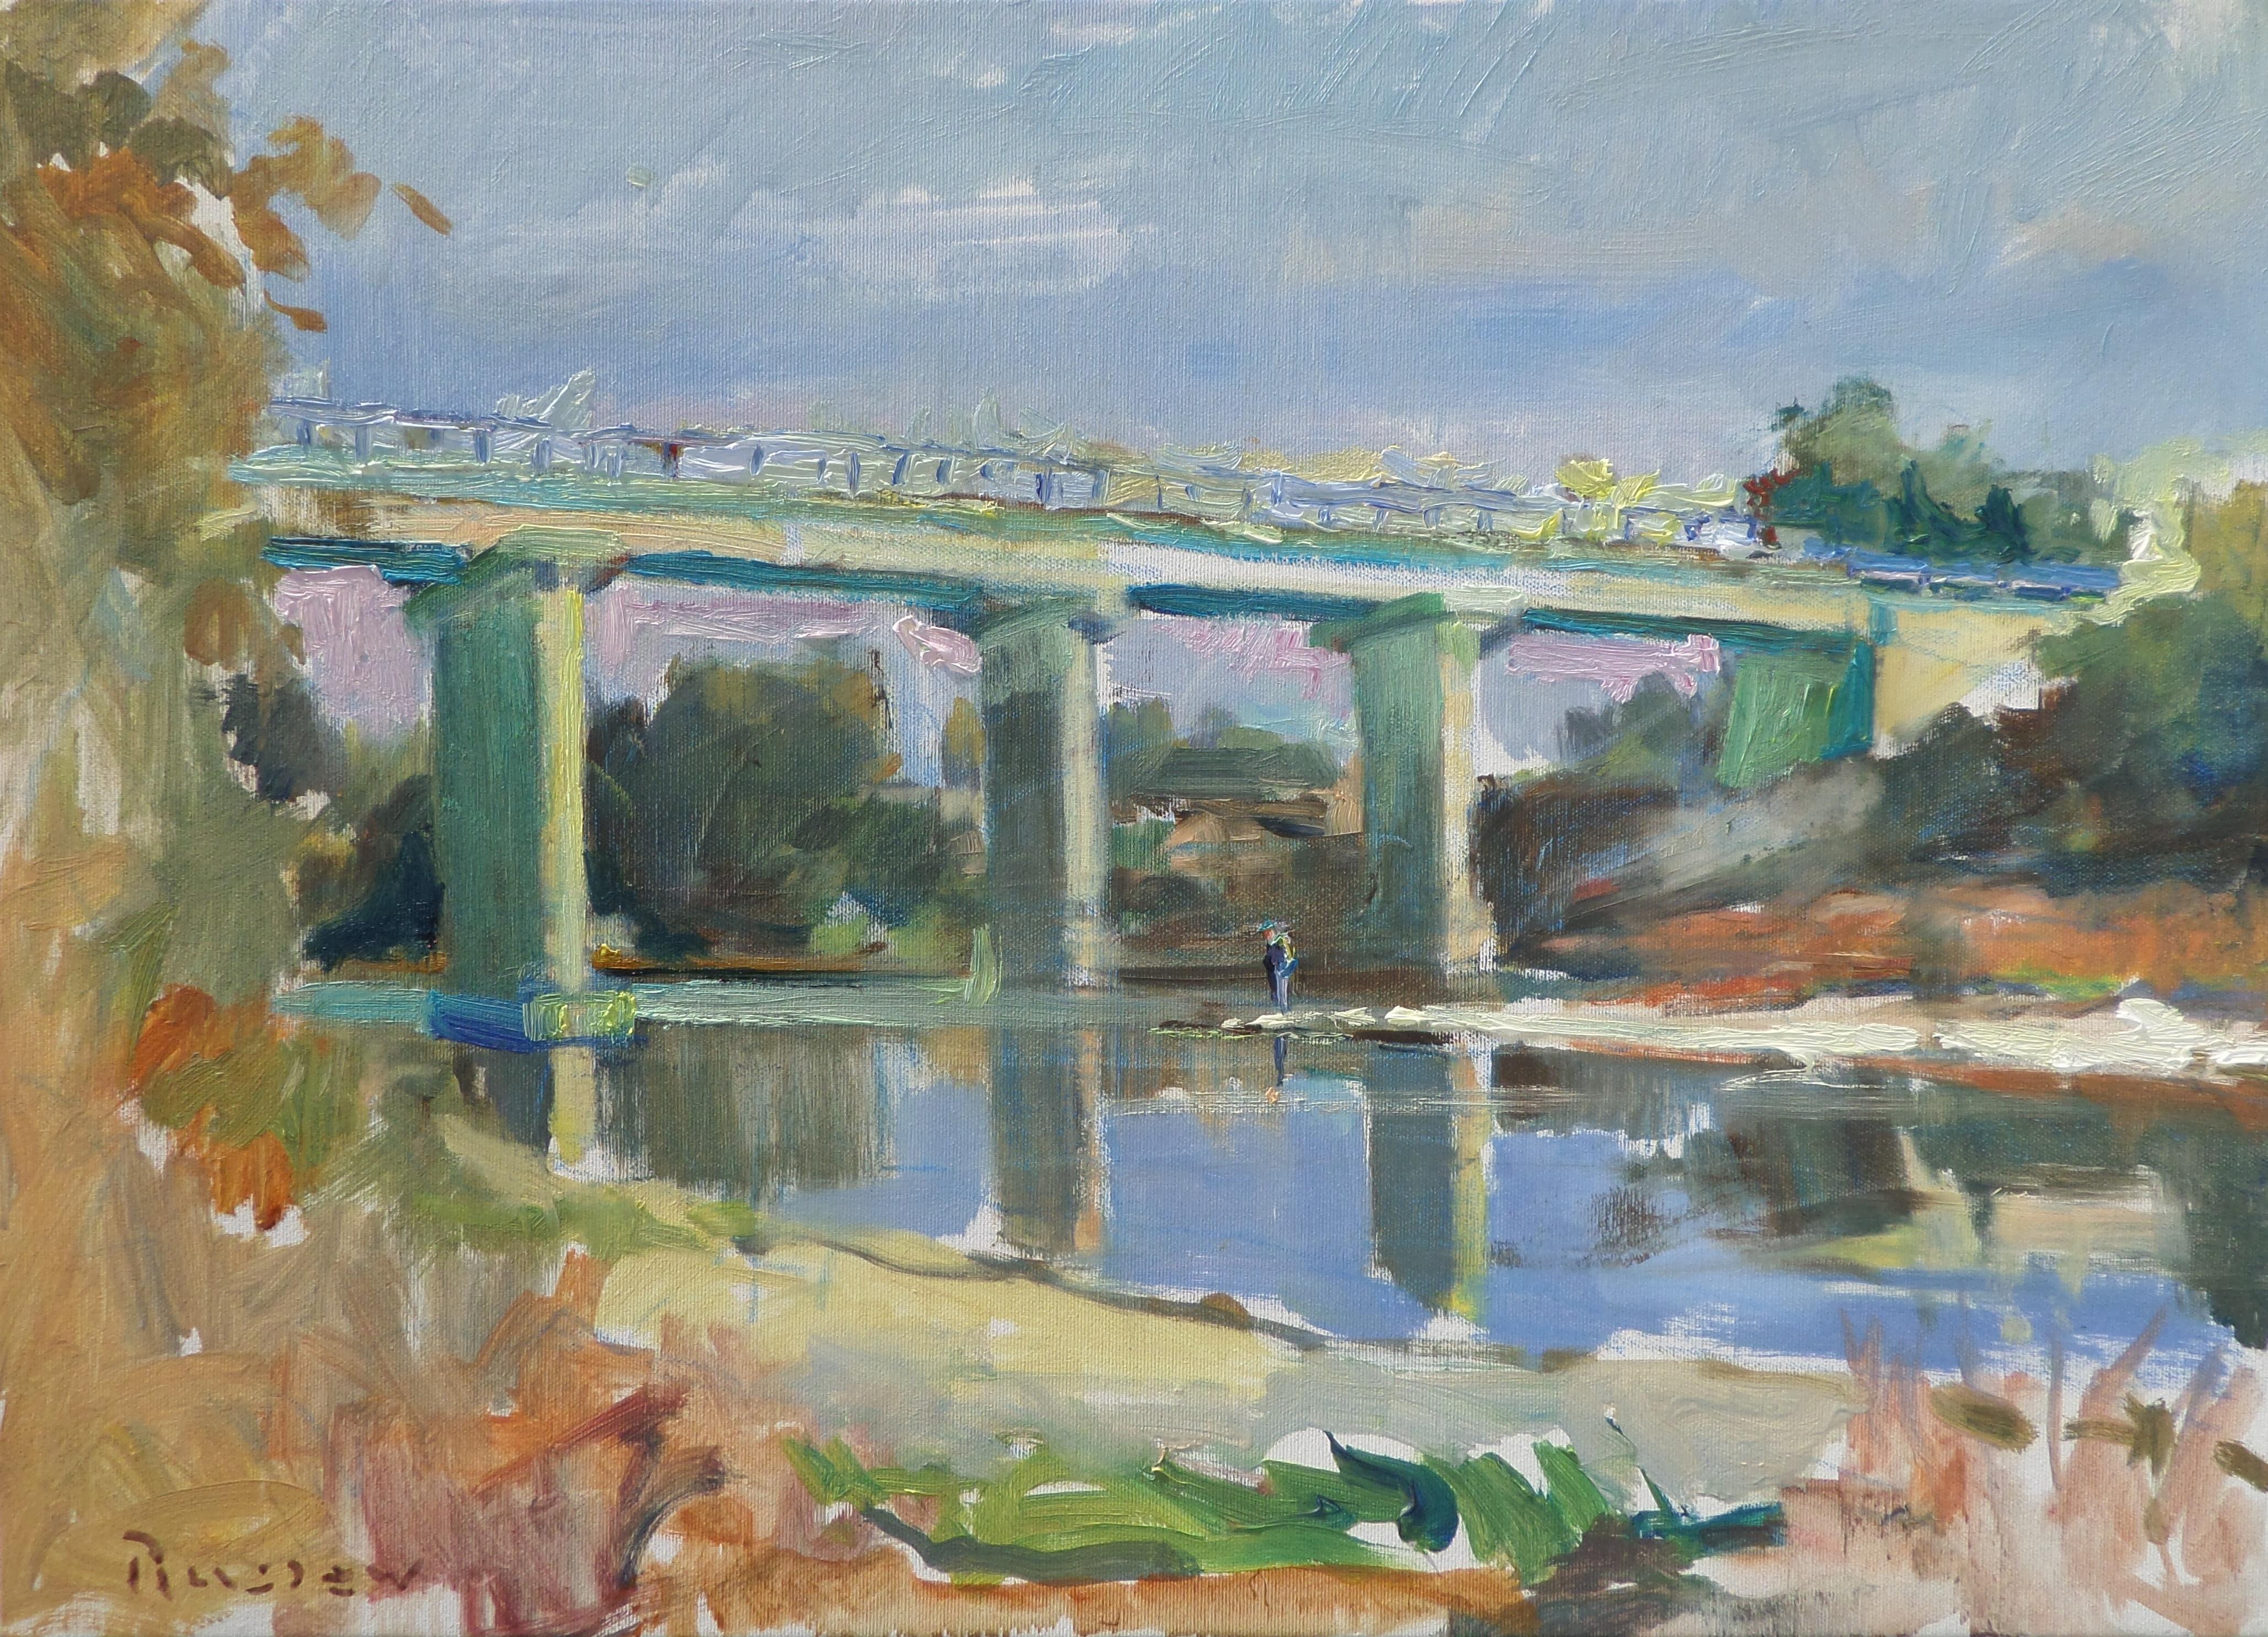 Ivan Roussev Landscape Painting - Down The River - Landscape Oil Painting Colors Green White Blue Brown 